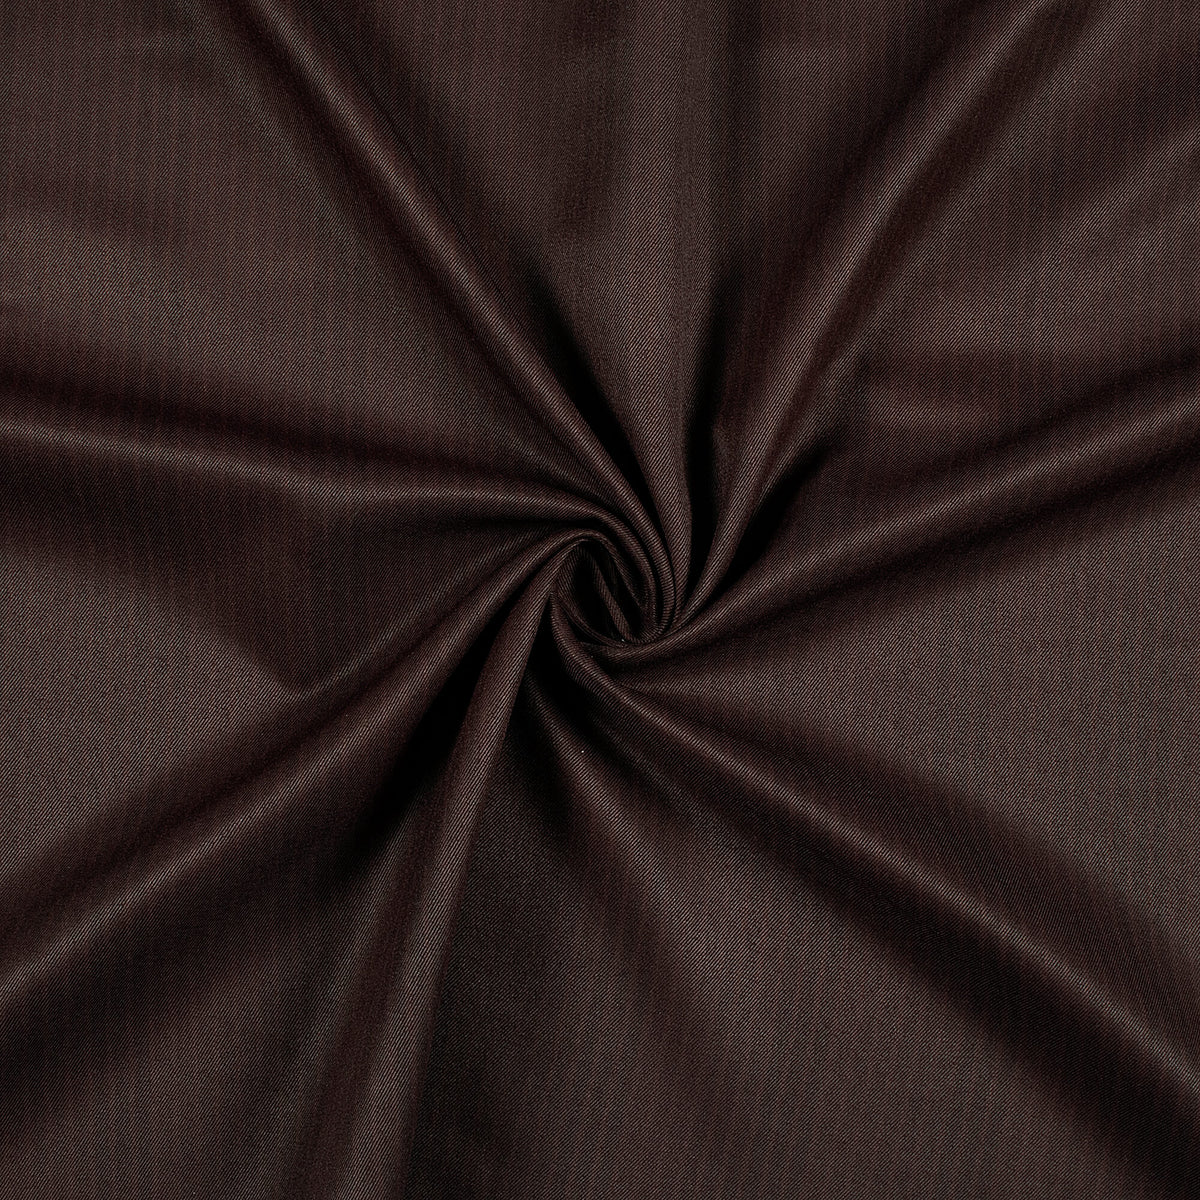 Dark Brown Stripes Printed Luxury Suiting Fabric